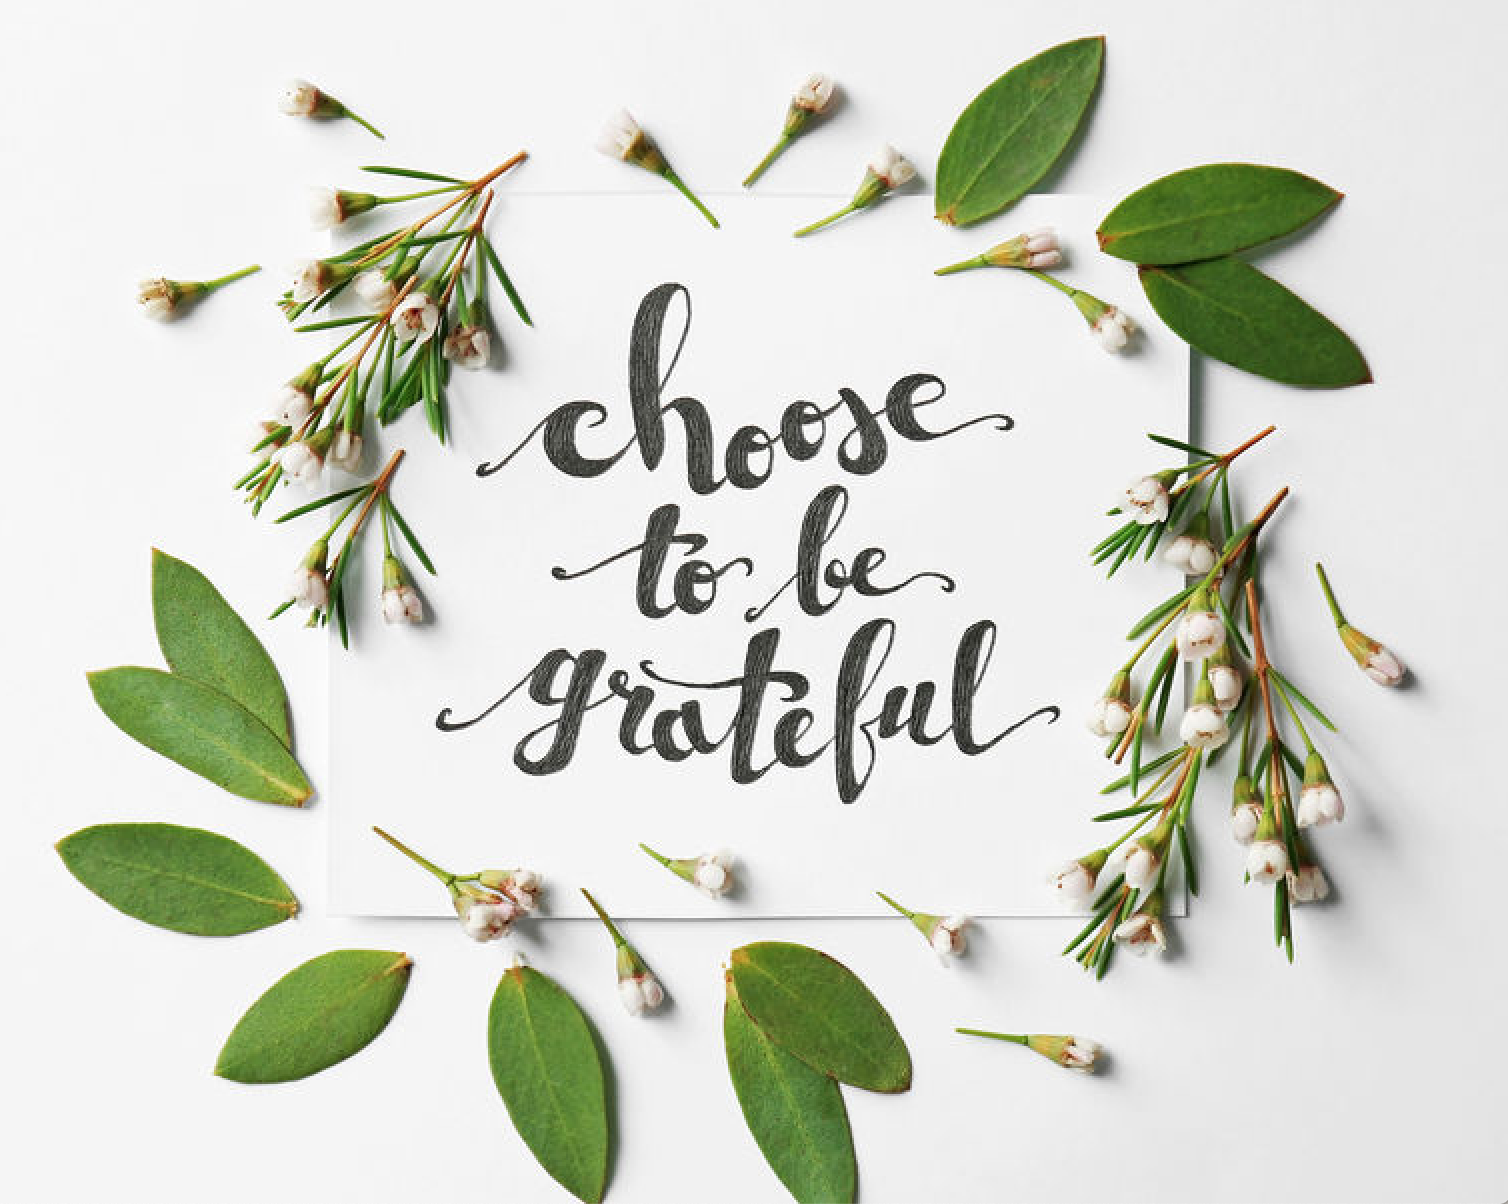 Grateful – Today I Choose to be Grateful